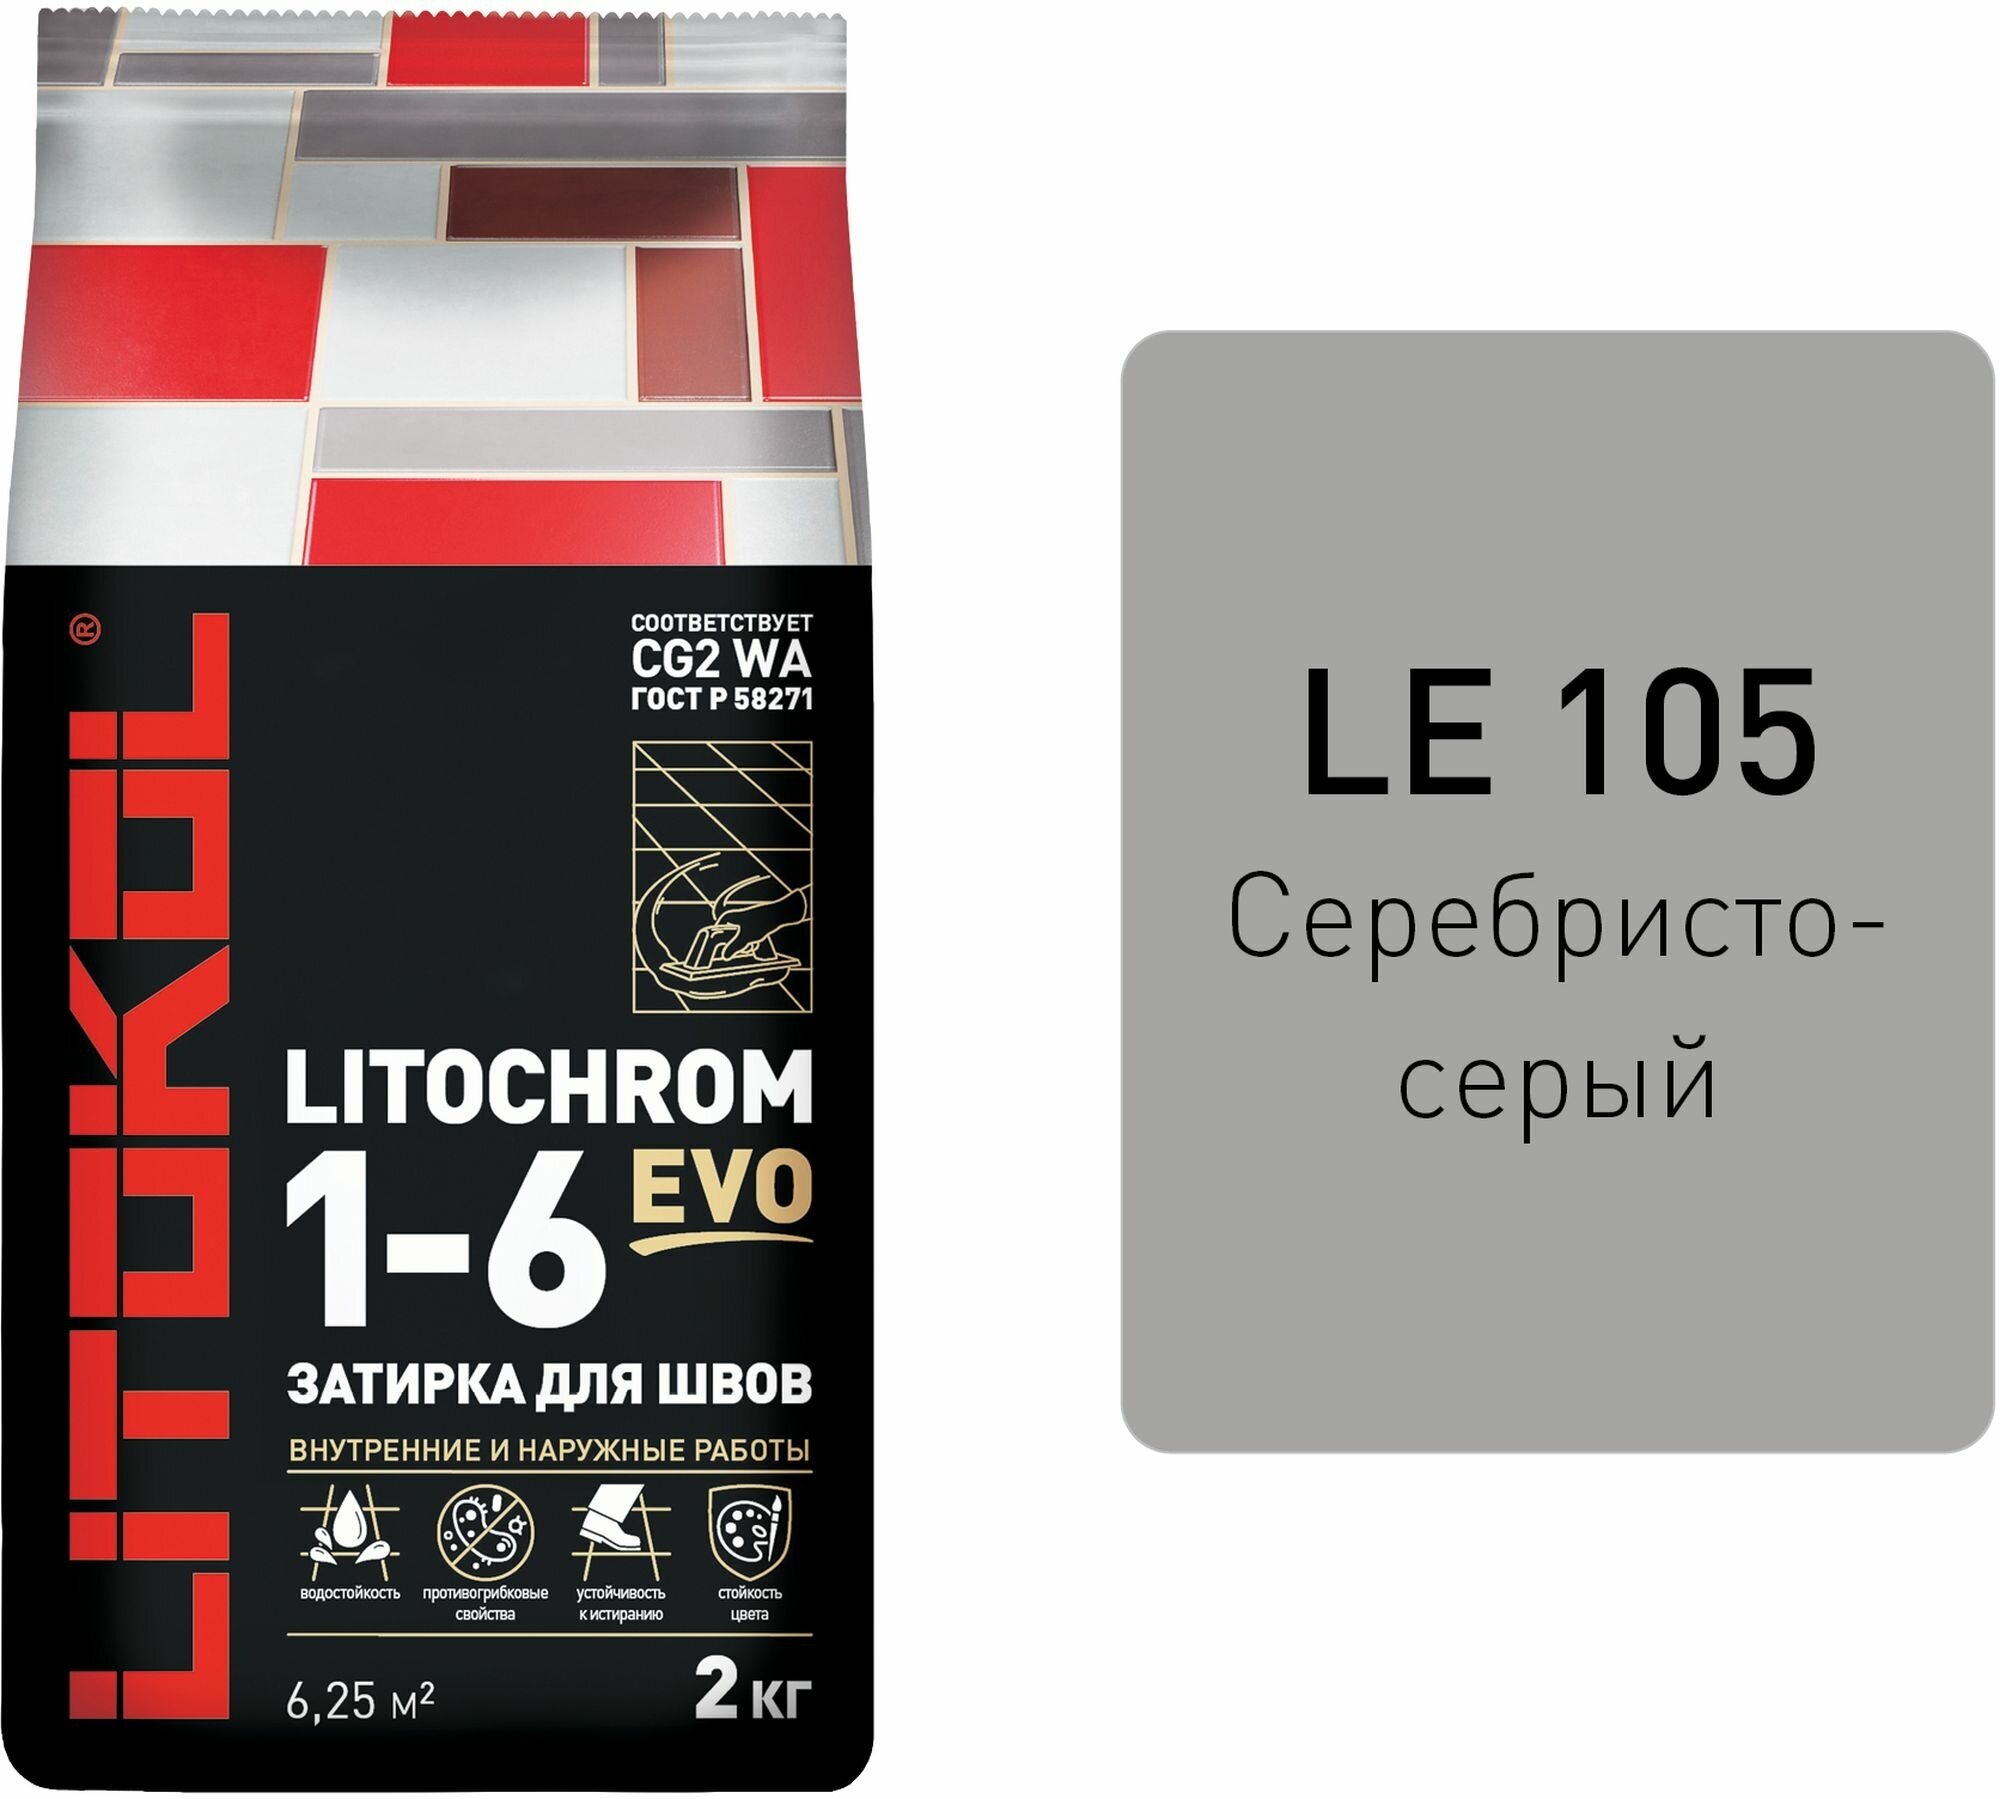 Затирка цементная LITOKOL LITOCHROM 1-6 EVO цвет LE 105 серебристо-серый 2 кг